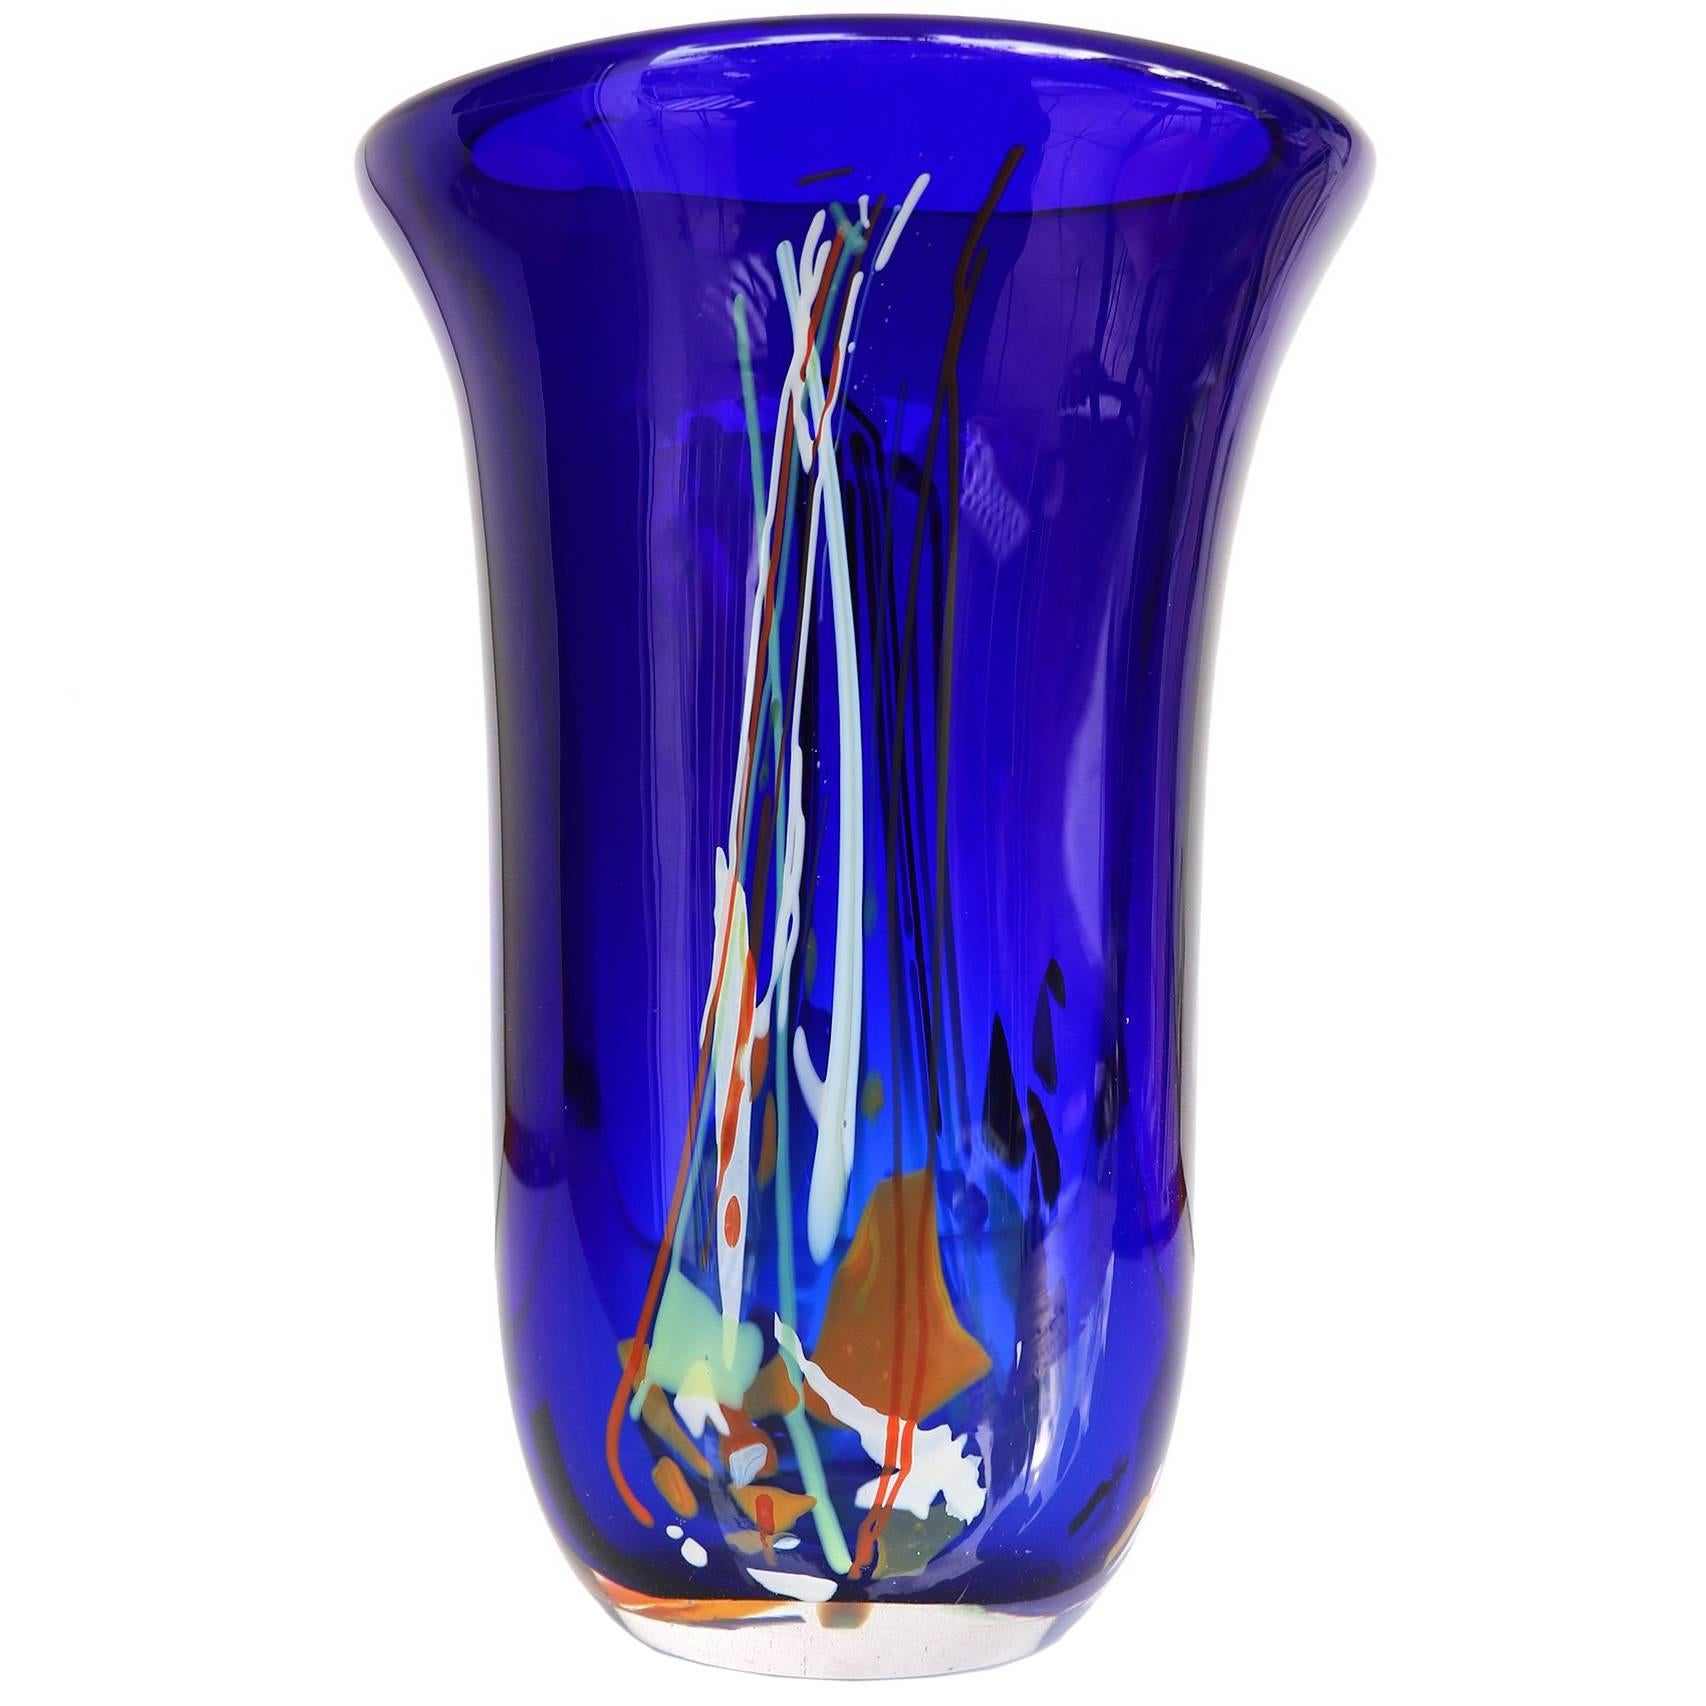 Large Cobalt Blue Handblown Glass Shard Vase